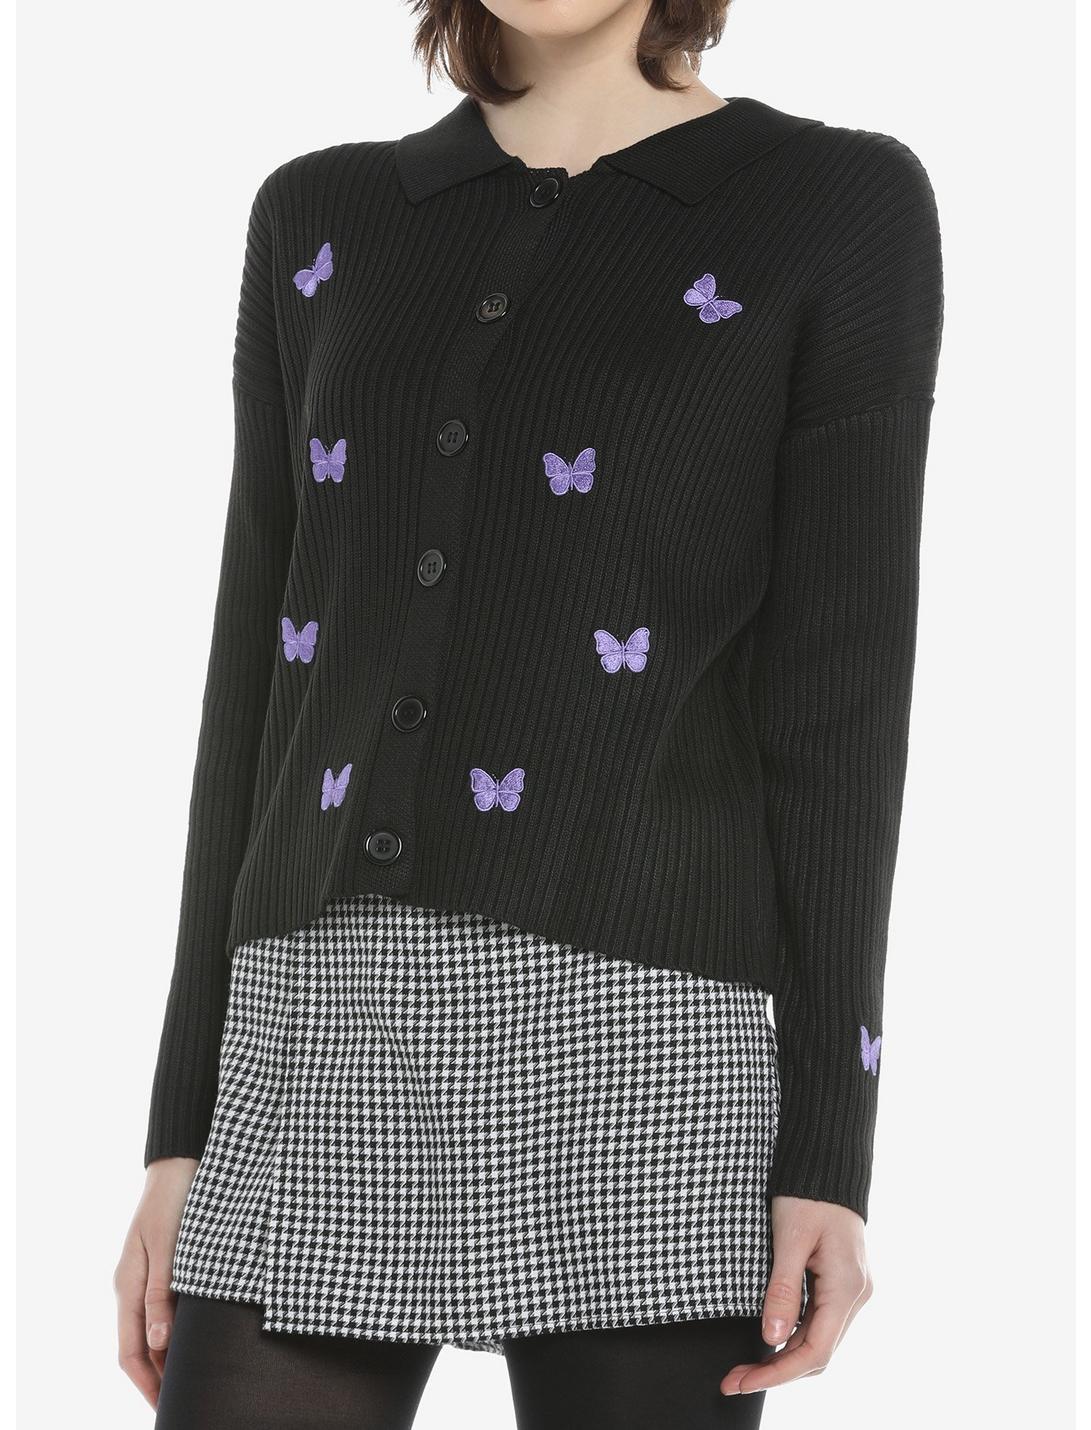 Daisy Street Purple Butterfly Girls Cardigan, BLACK, hi-res